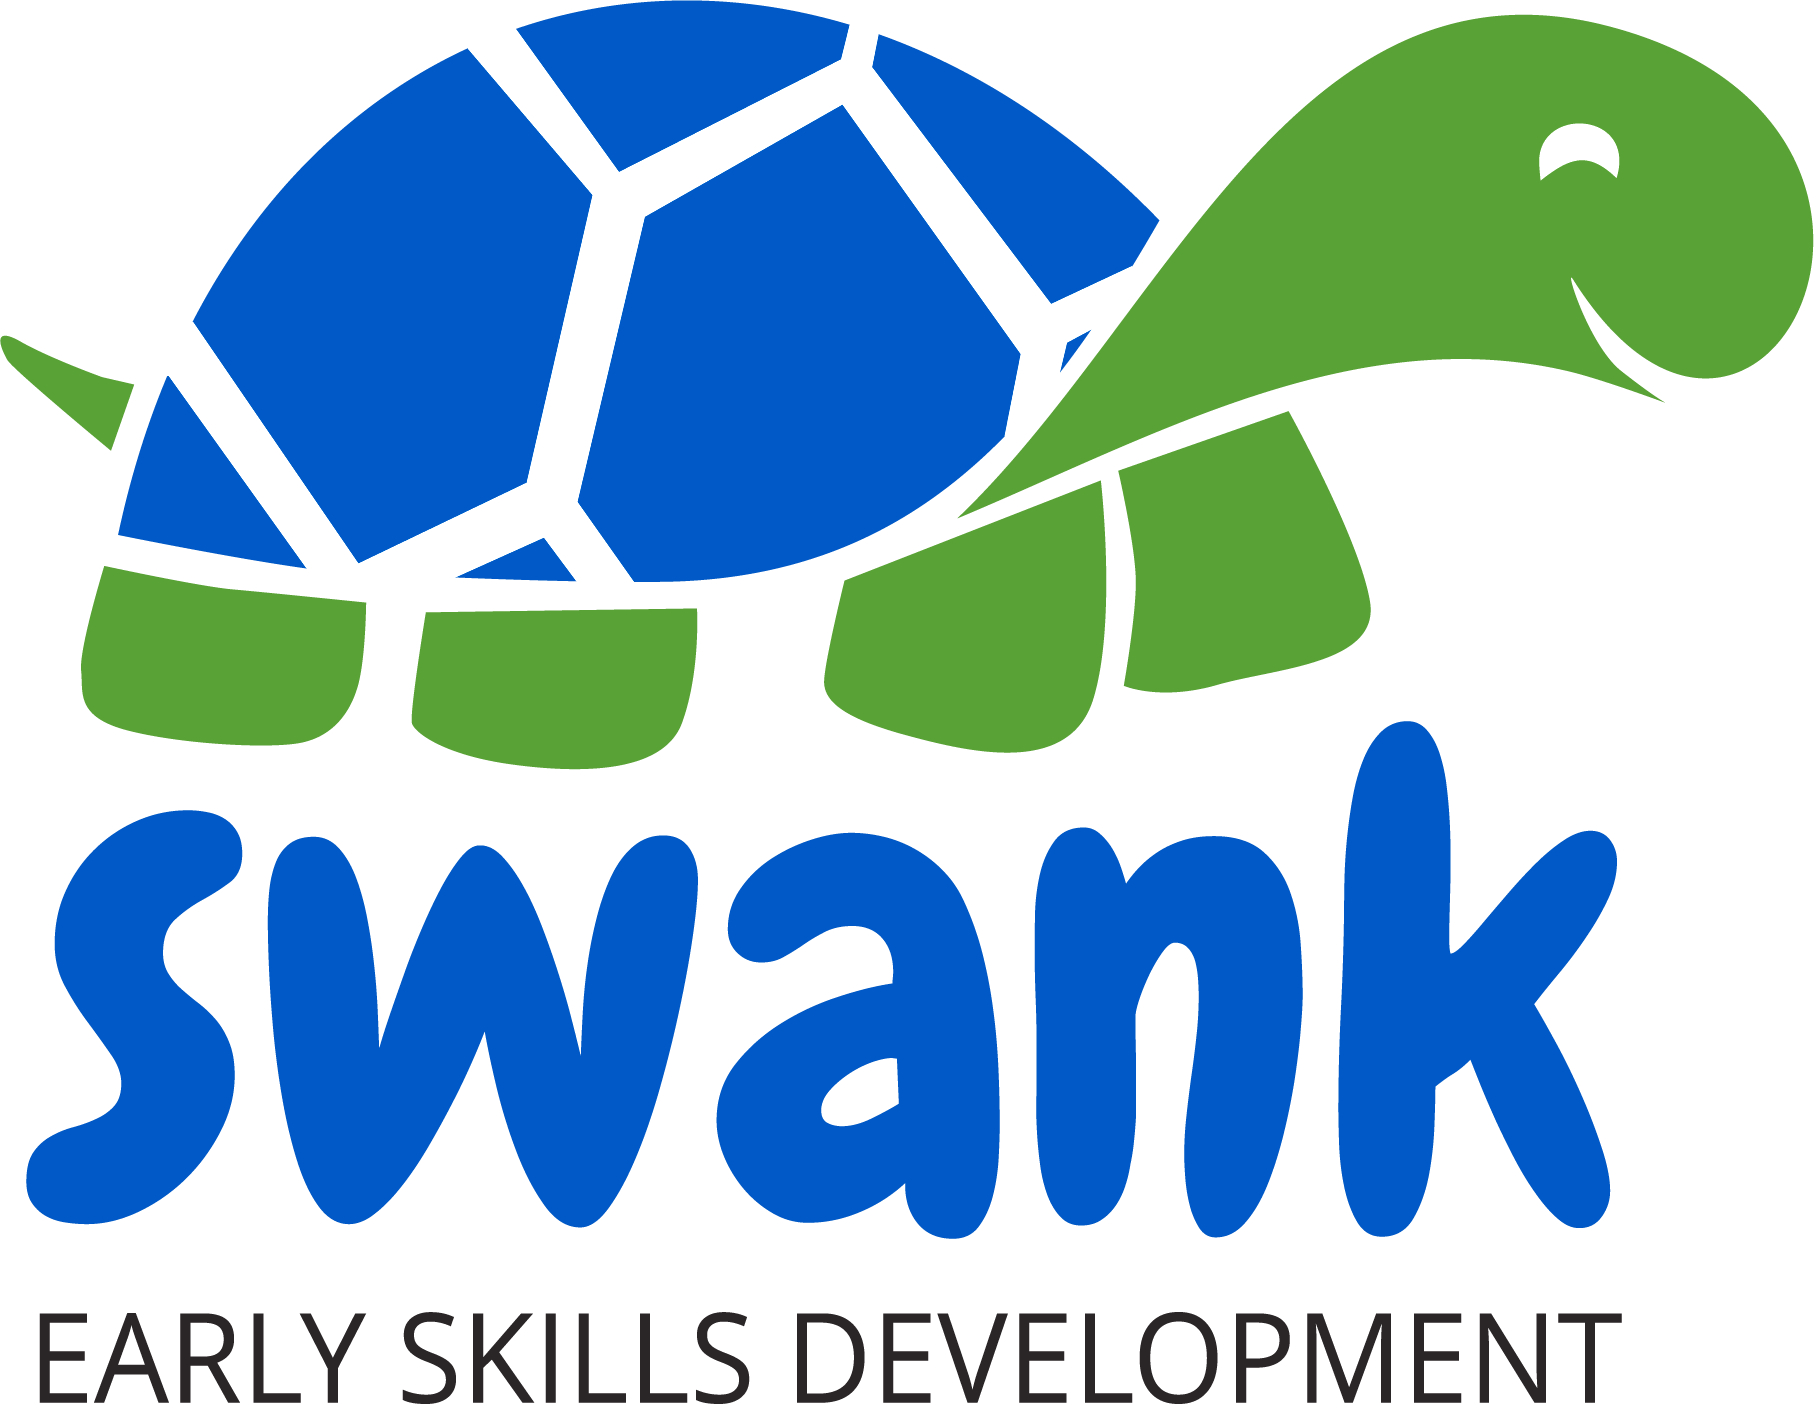 Swank Early Skills Development